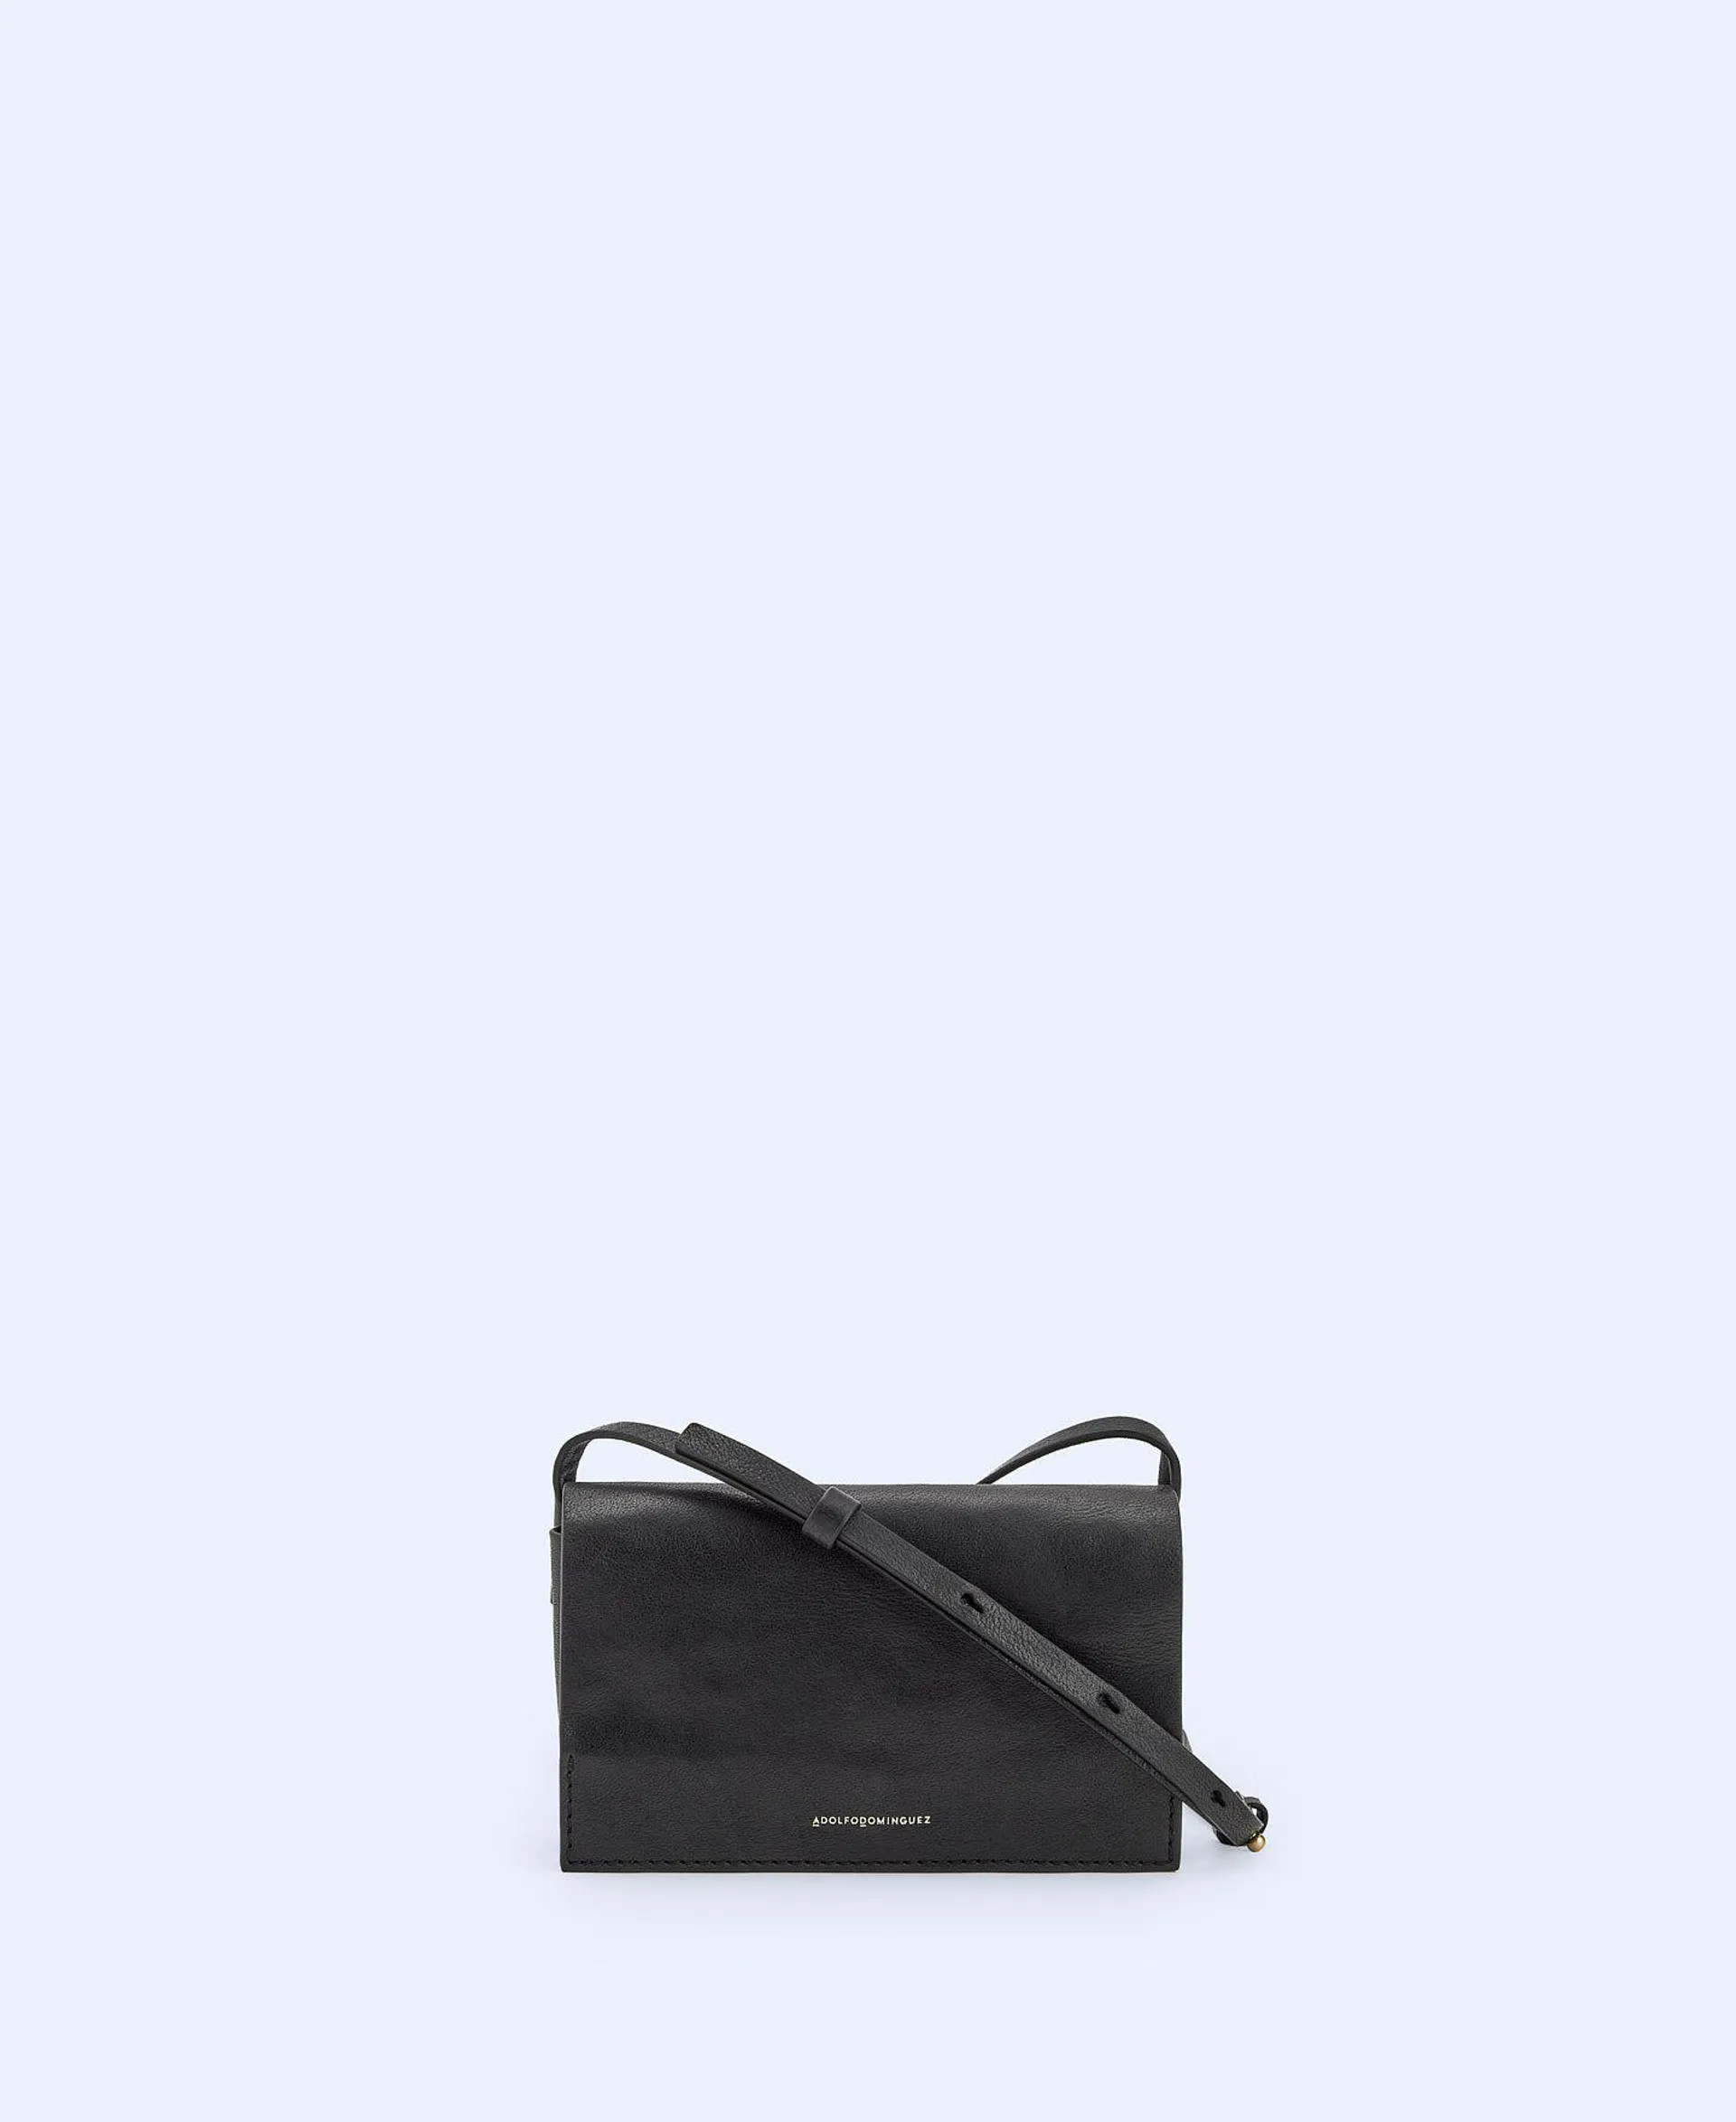 Vachetta leather small shoulder bag